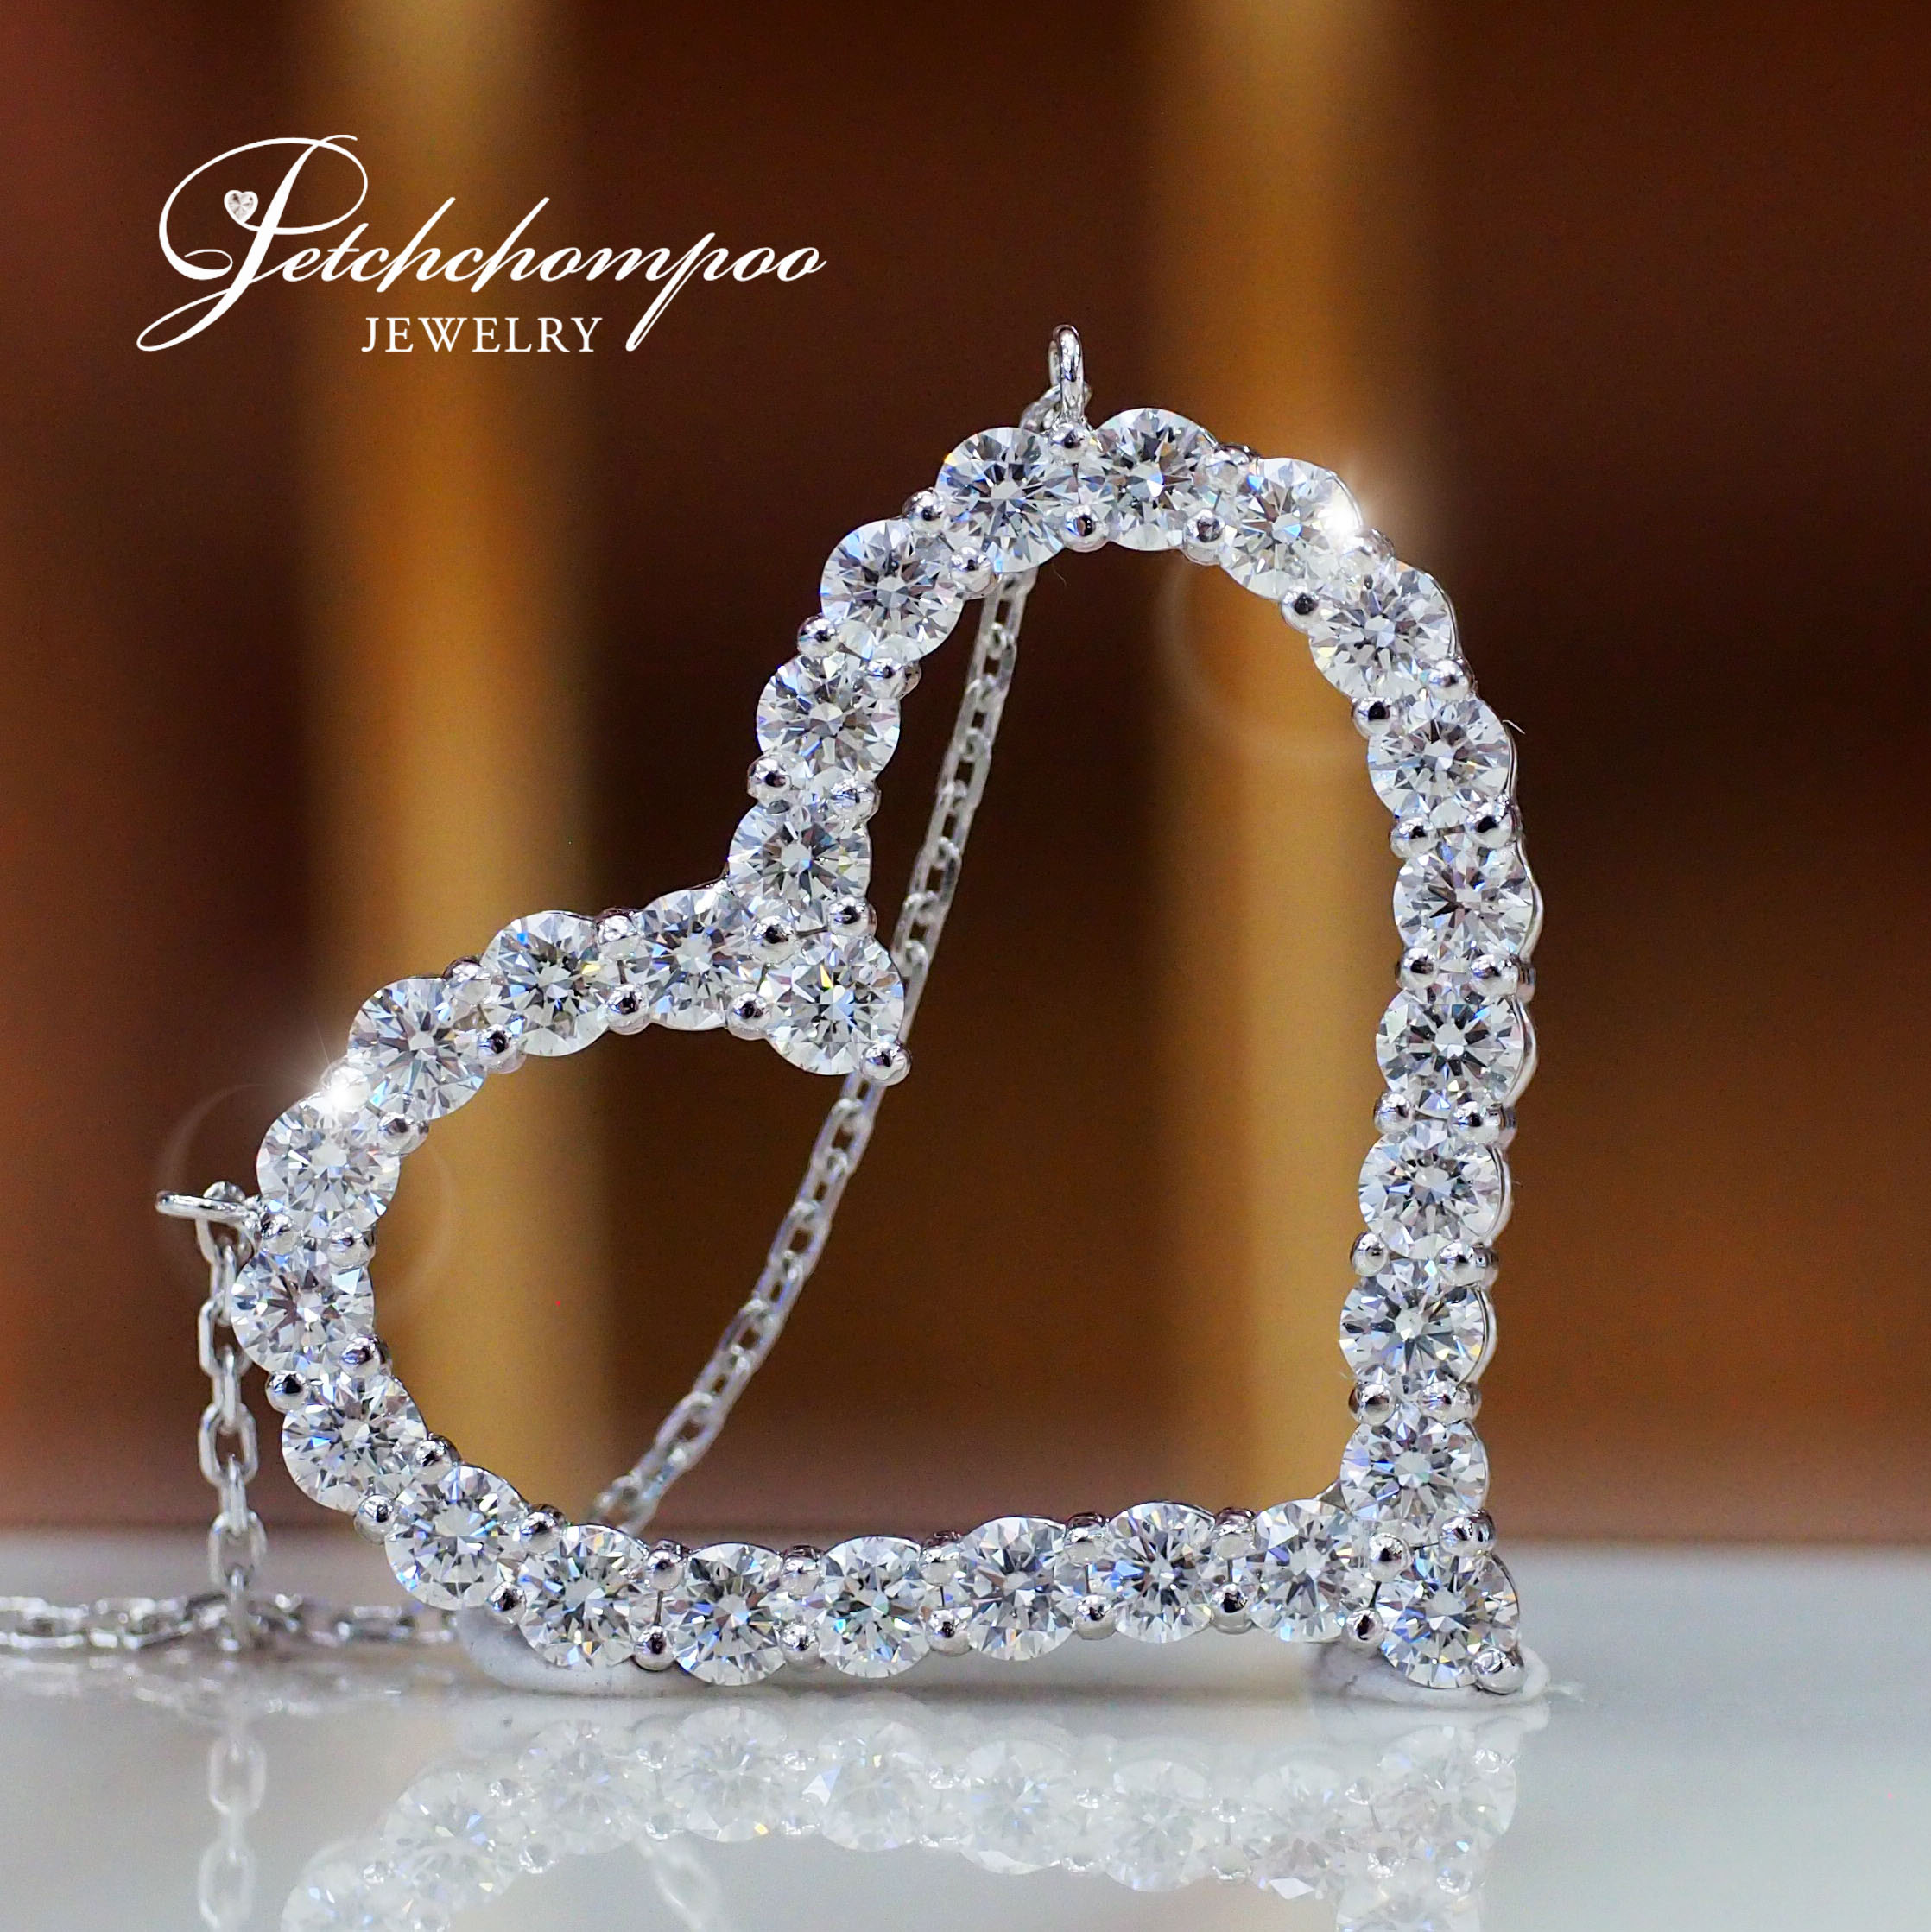 [26962] Necklace with 1.54 carat diamond pendant.  59,000 